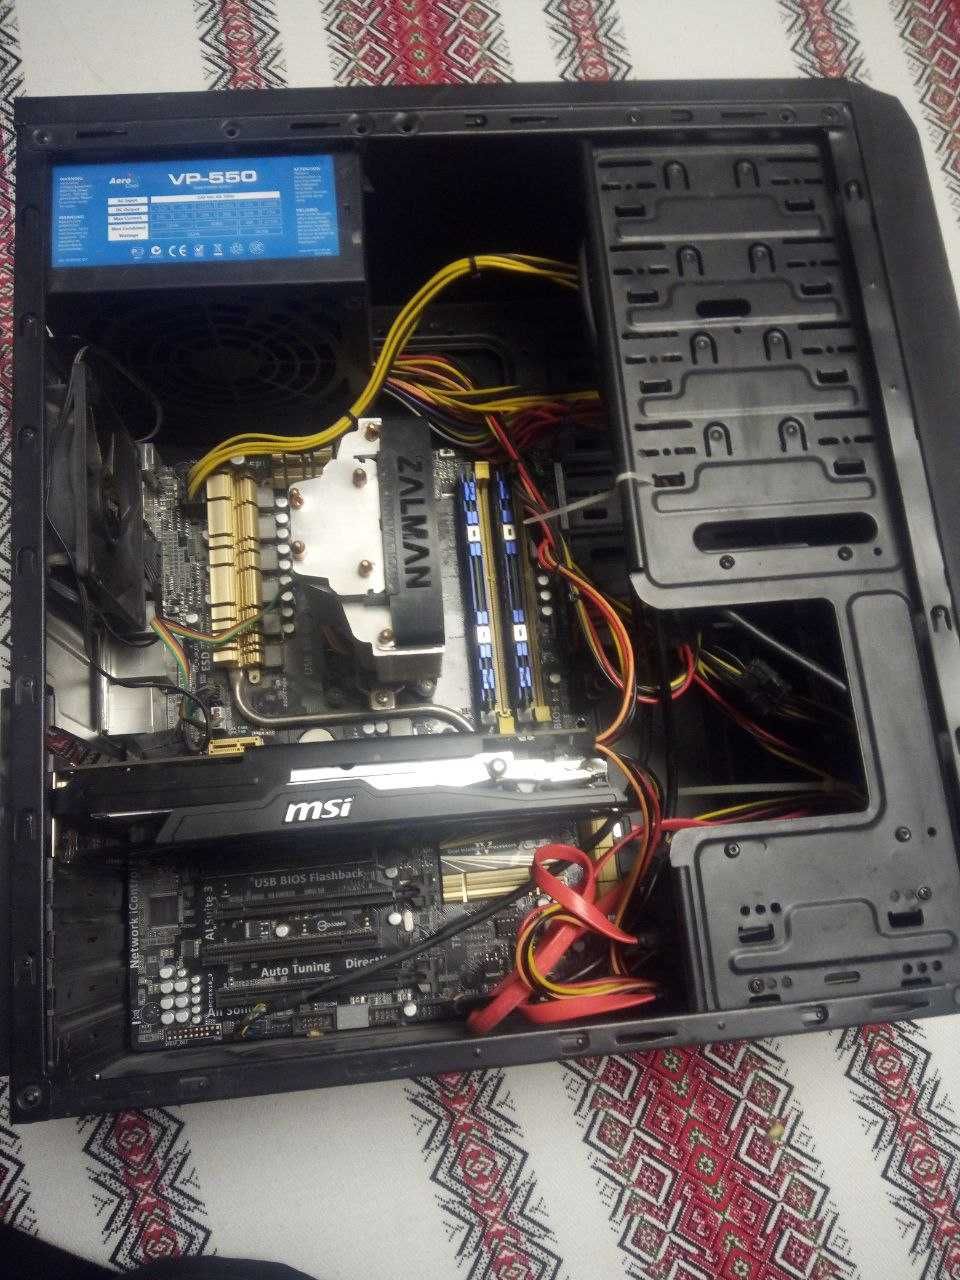 Компютер PC AMD A10, Asus A88X-Pro, 16 GB RAM, SSD 128 + HDD 500